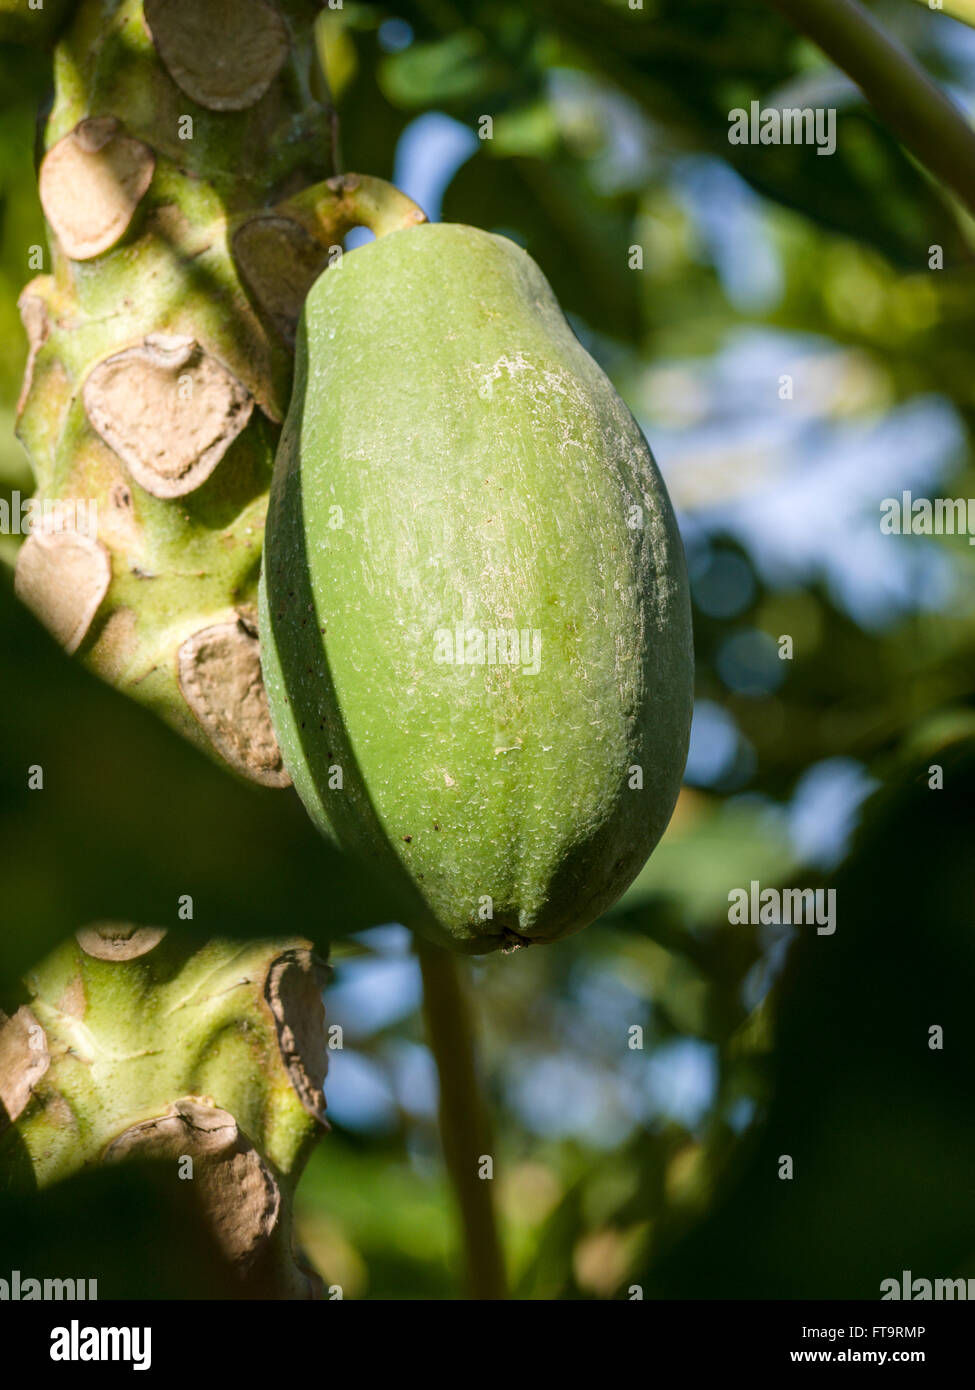 Only one Papaya Left. One large green papaya ripens on the often cut stem of a papaya tree  in a young papaya orchard Stock Photo